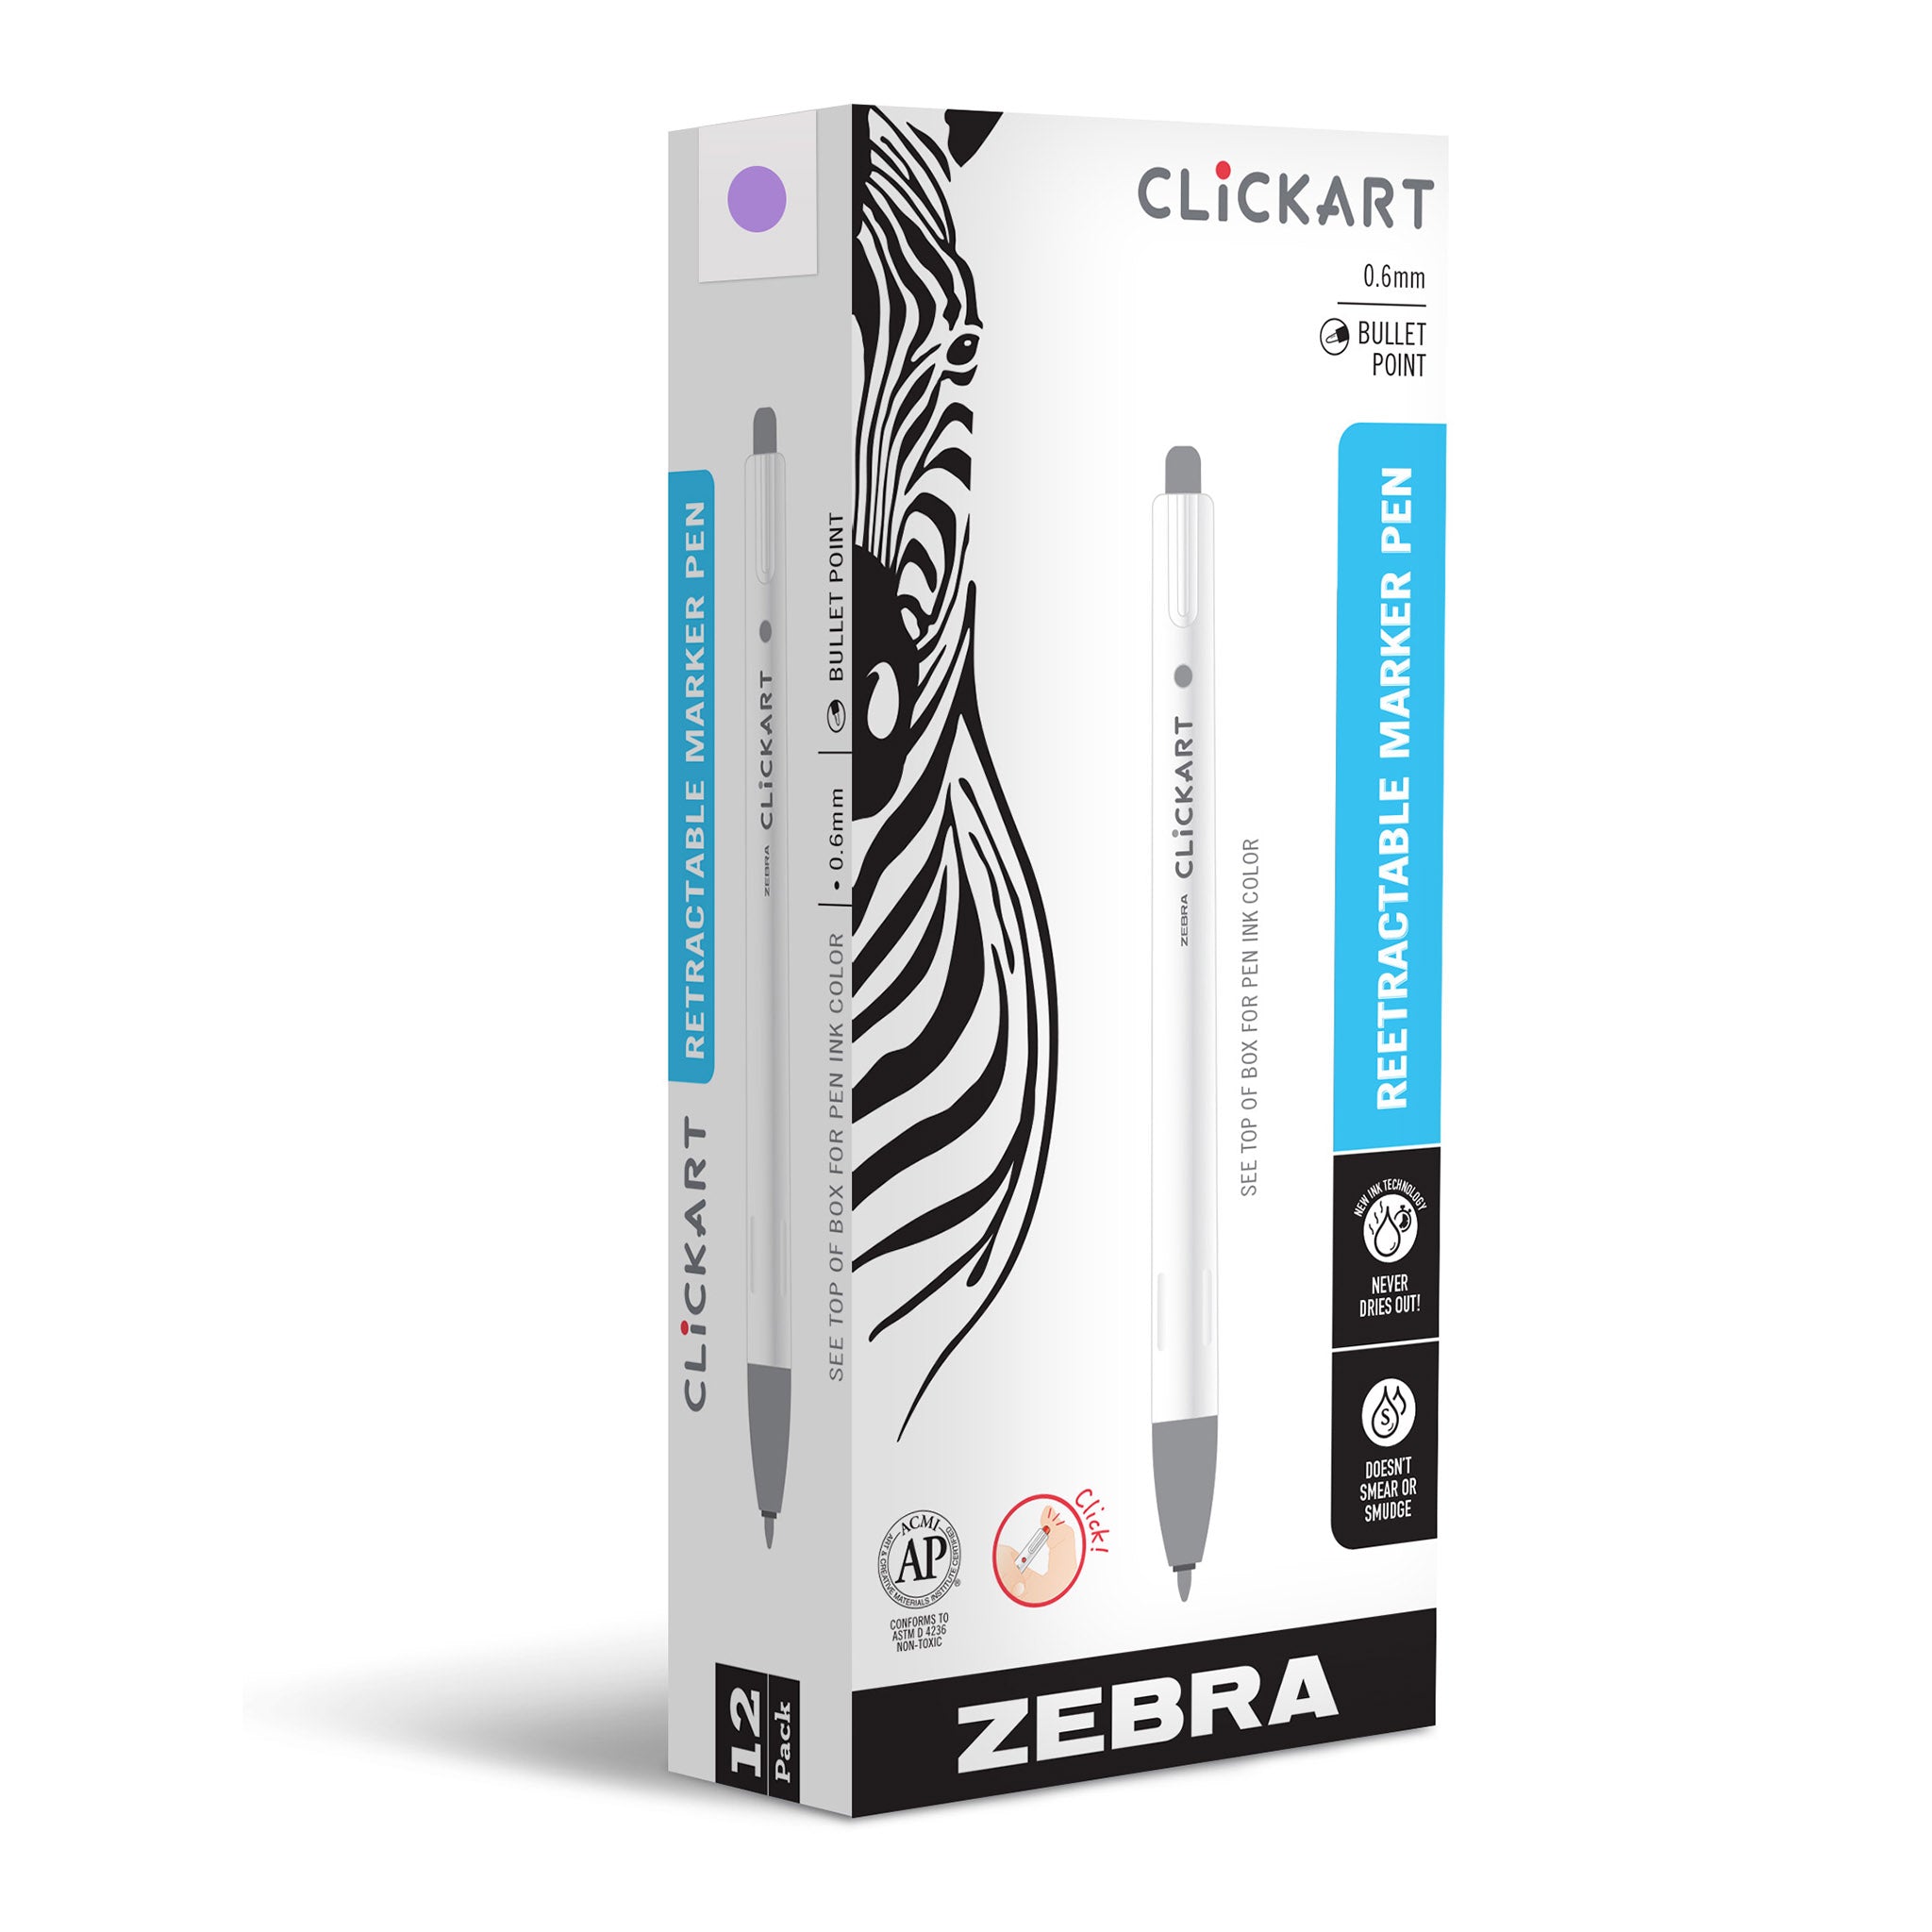 Zebra Pen ClickArt Retractable Marker Pen, Fine Point, 0.6mm, Assorted Dark  Ink Colors, 12-Pack (69812)